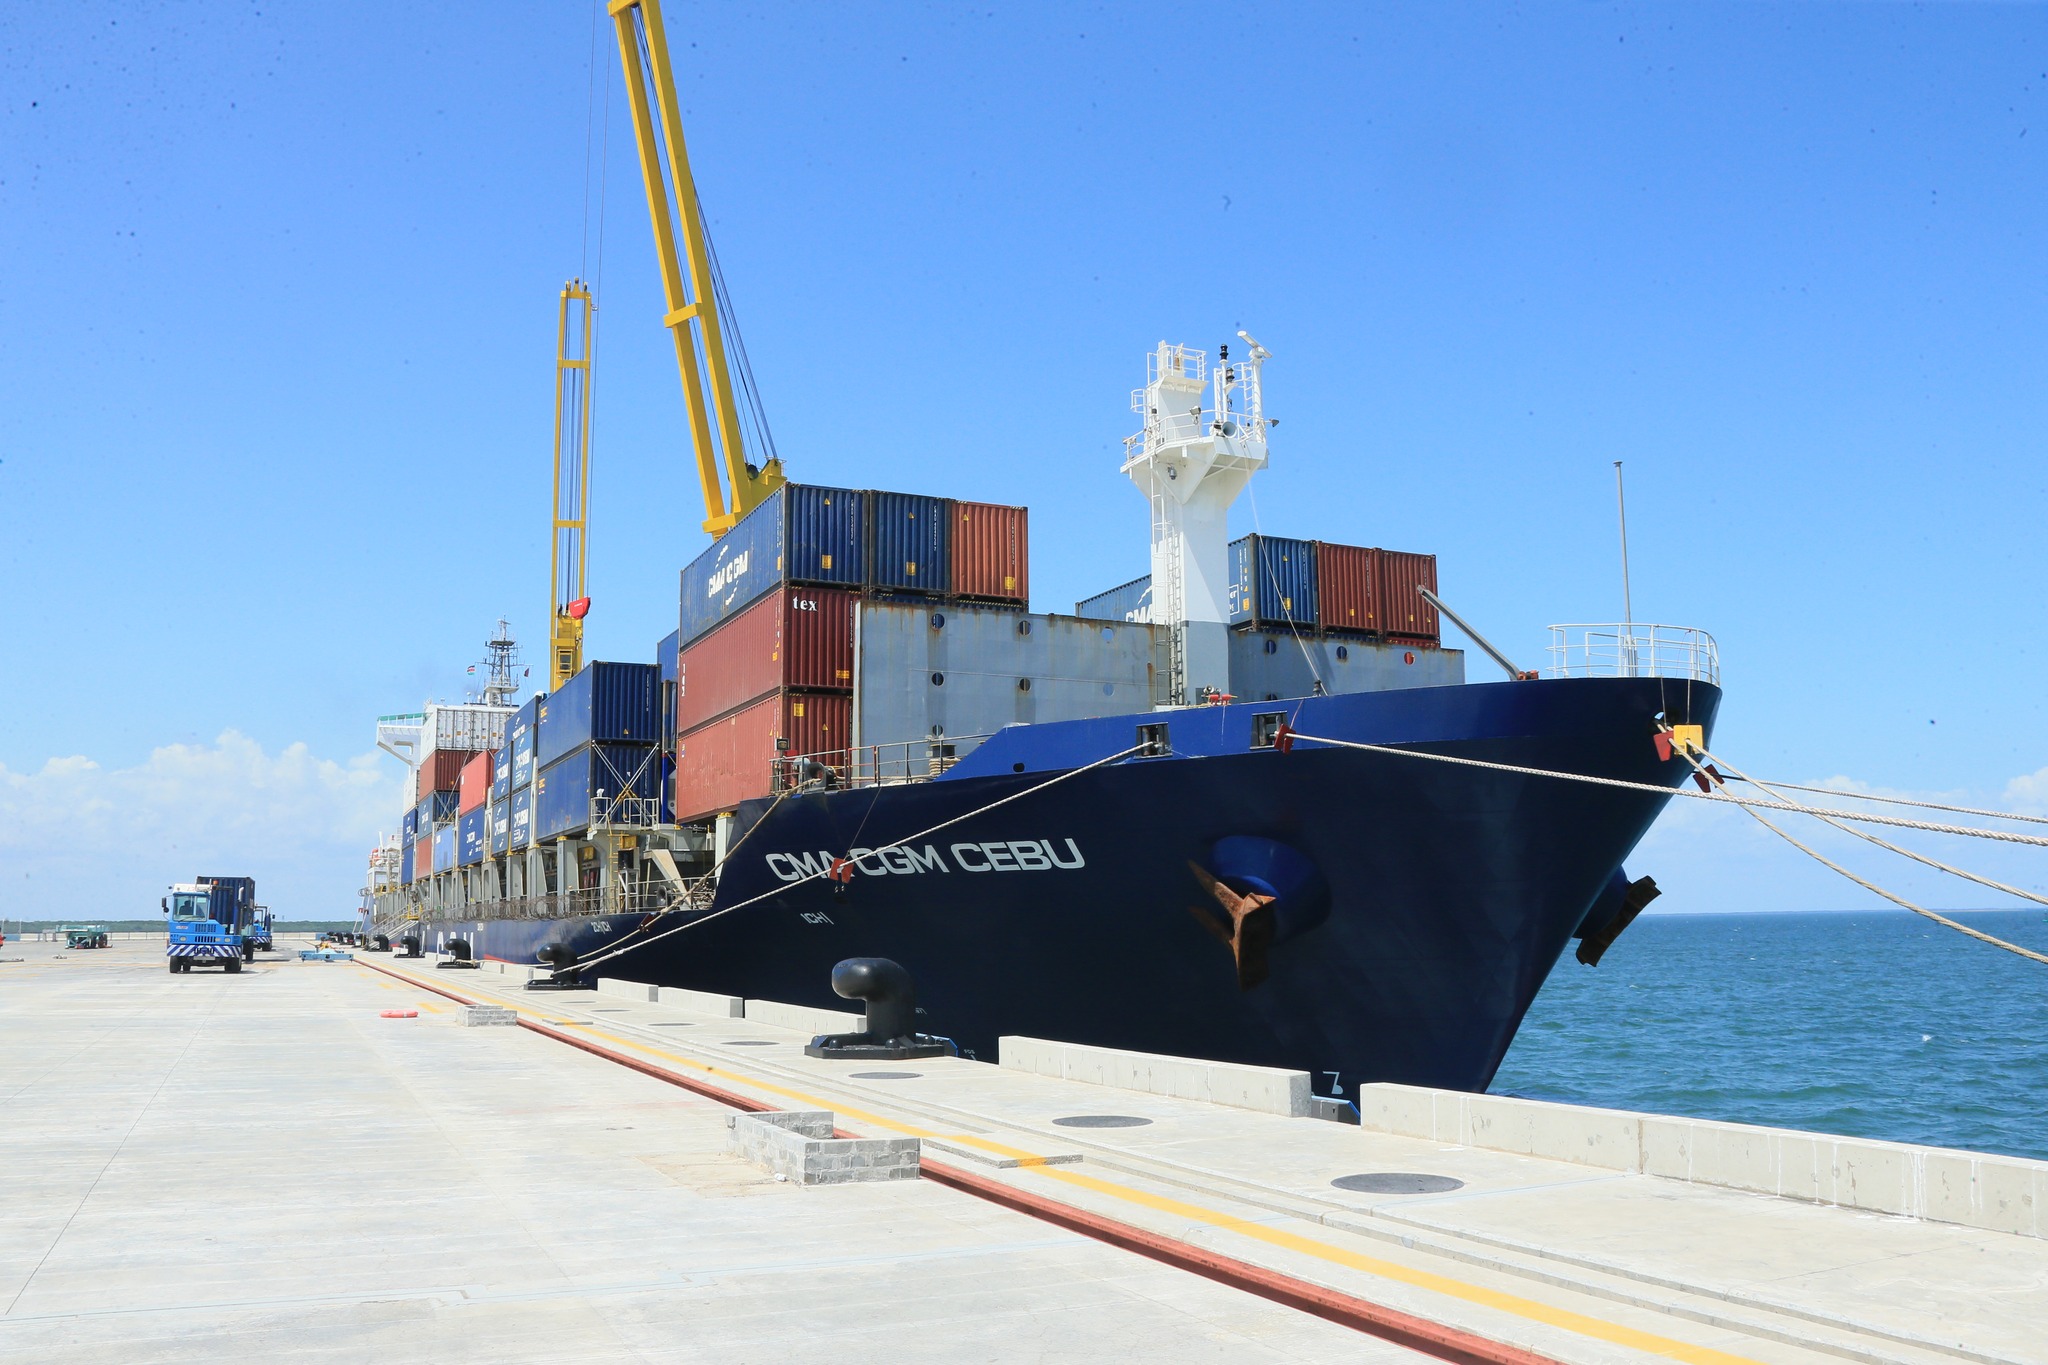 Kenya : Lamu Port received 300 TEUs of transshipment cargo destined for the Port of Zanzibar